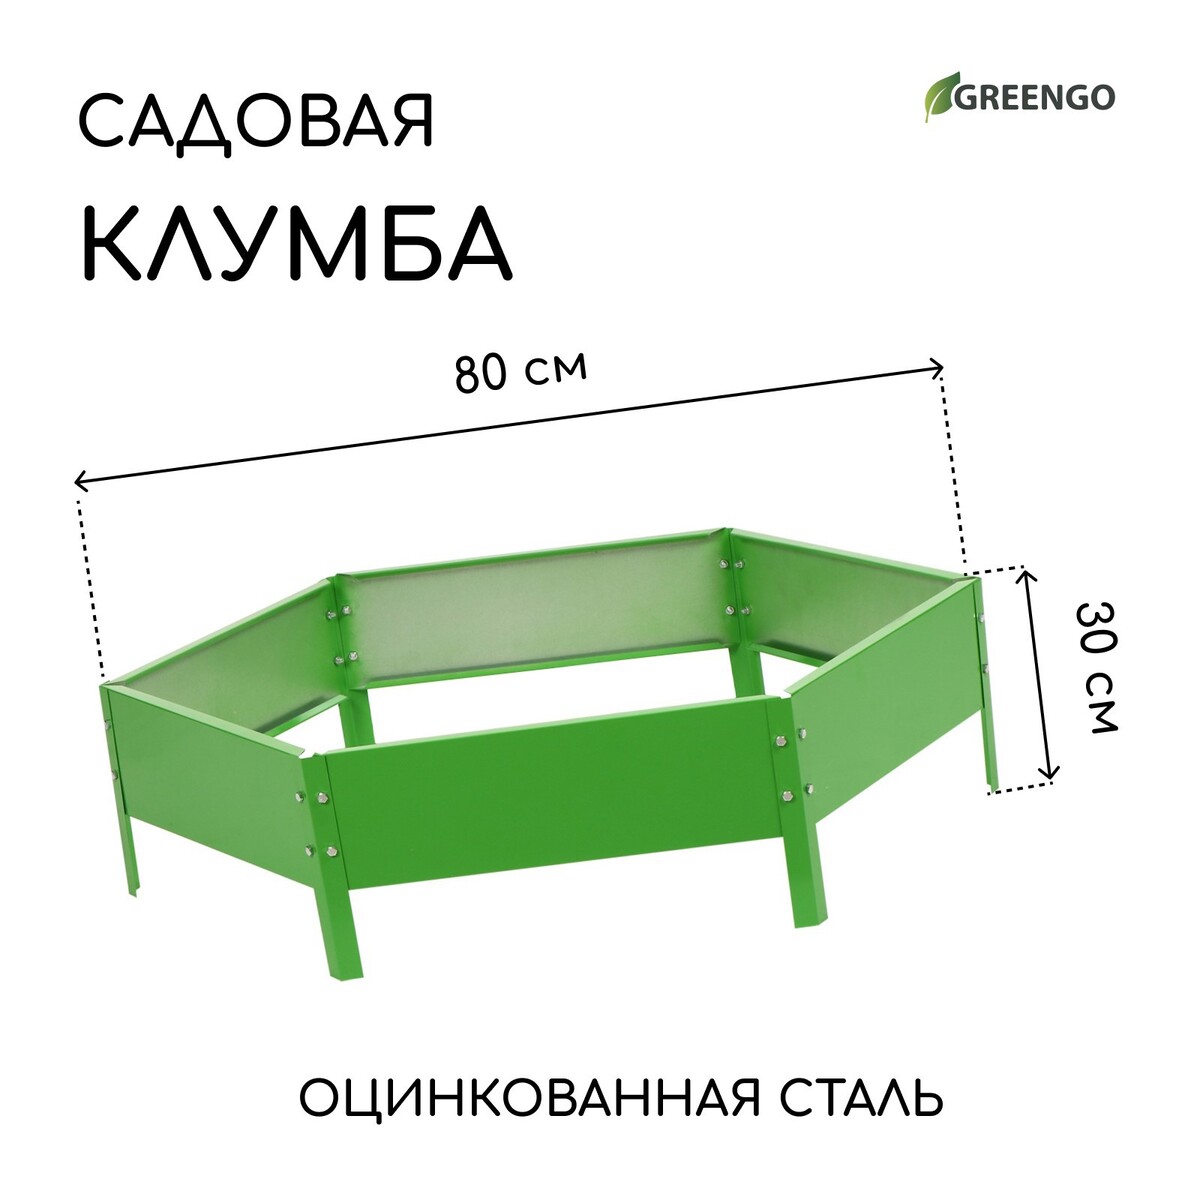 Клумба оцинкованная, d = 80 см, h = 15 см, ярко-зеленая, greengo Greengo